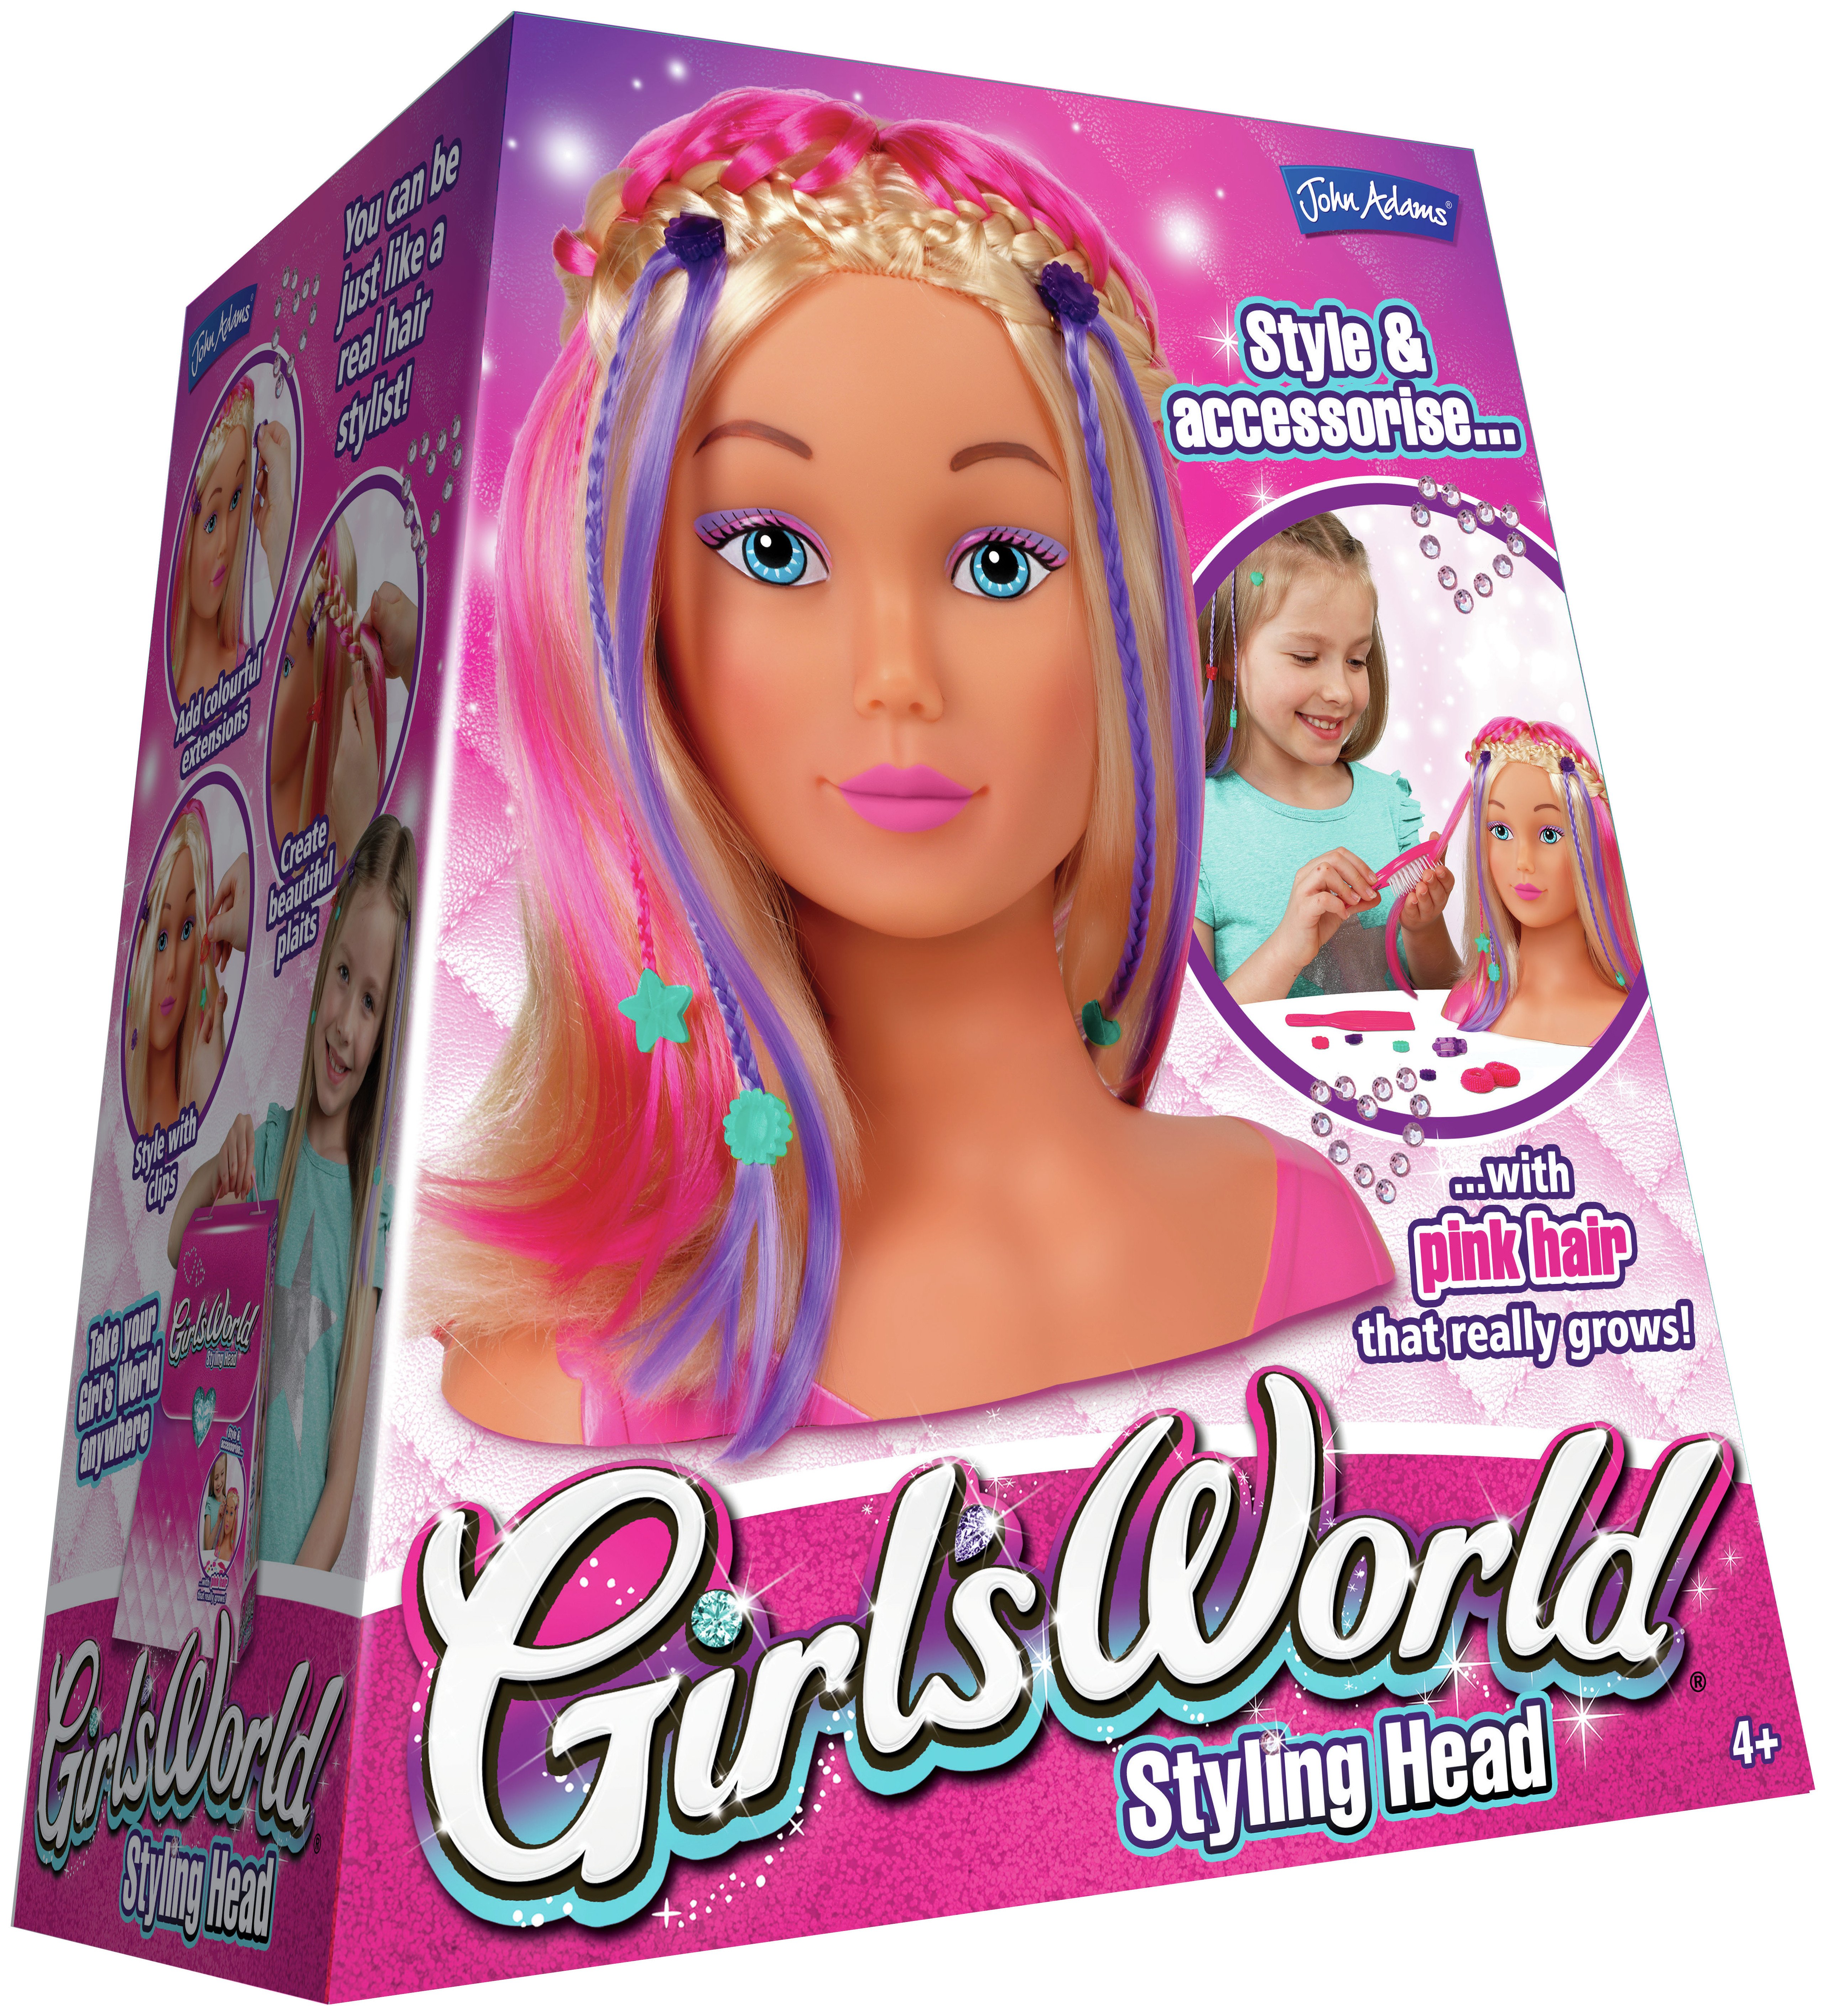 Girls world dolls head